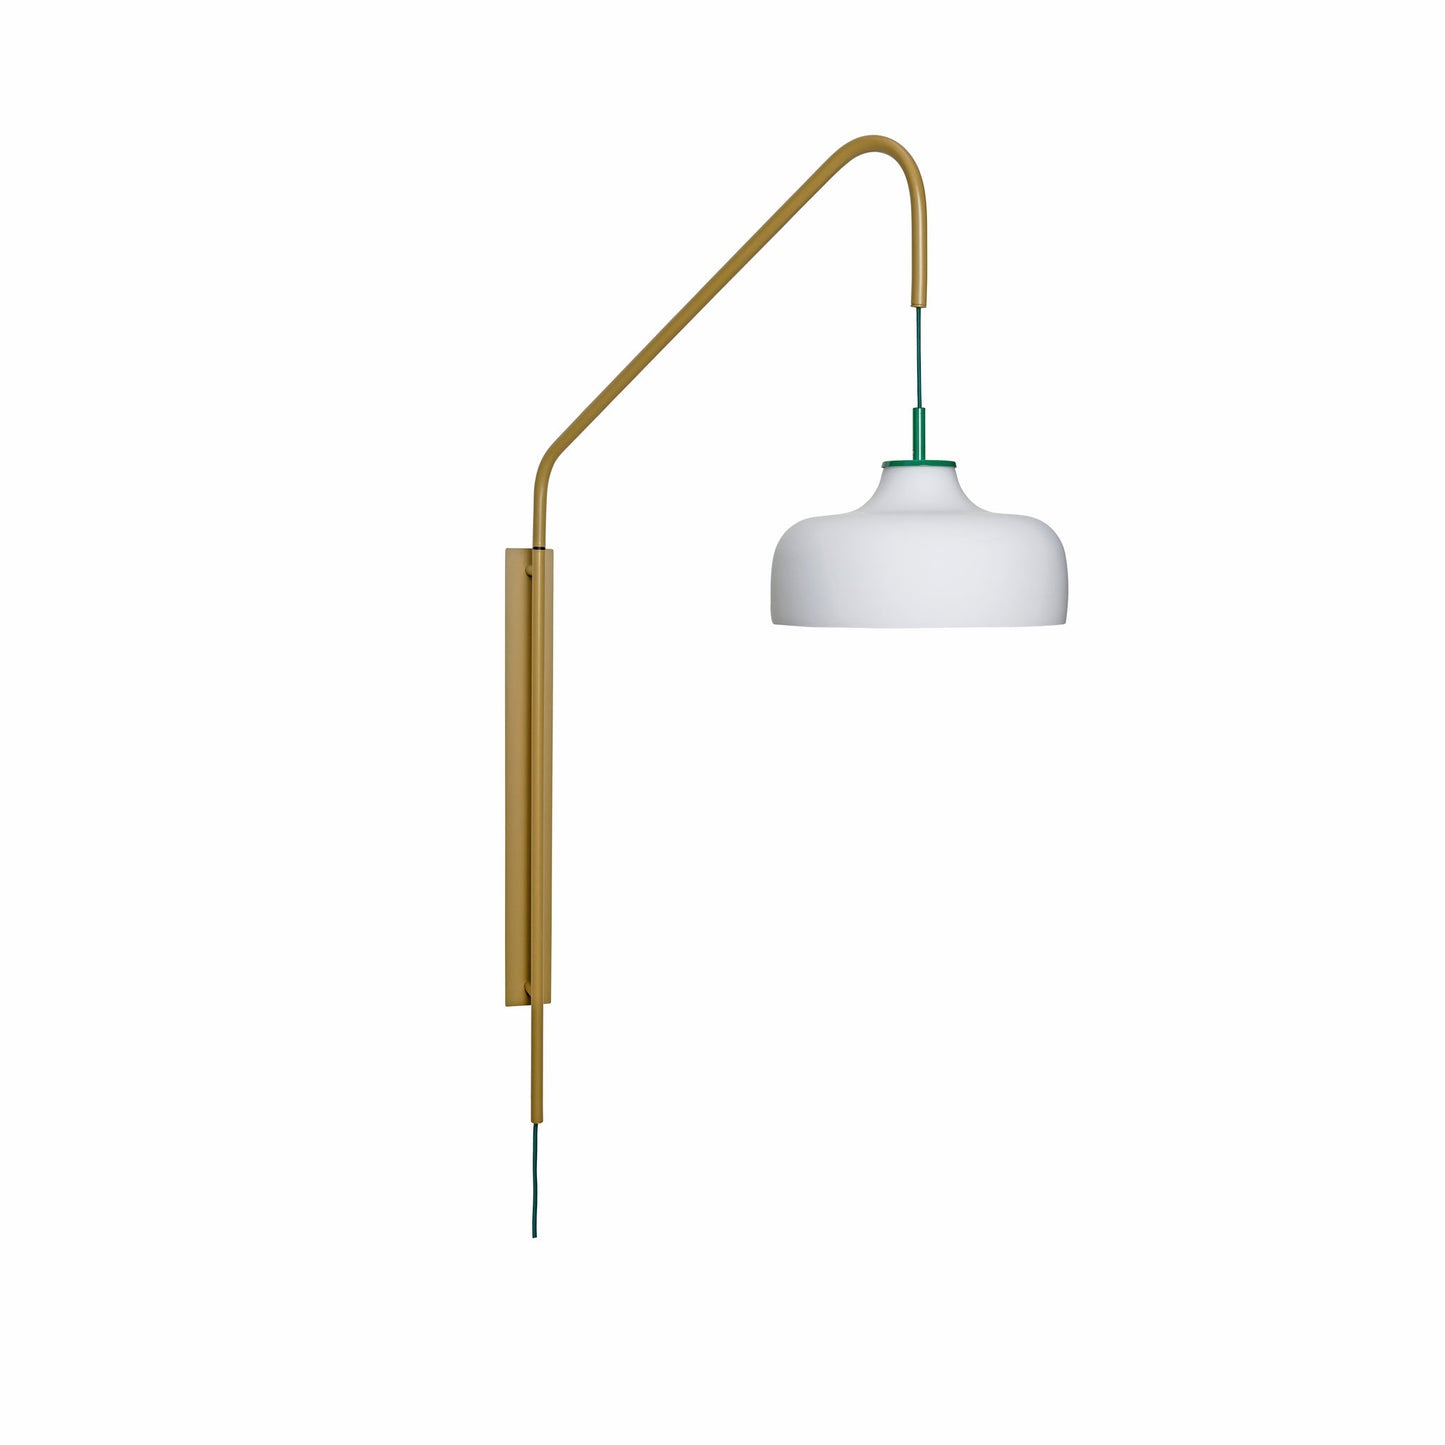 Current - Væglampe, Grøn/Khaki